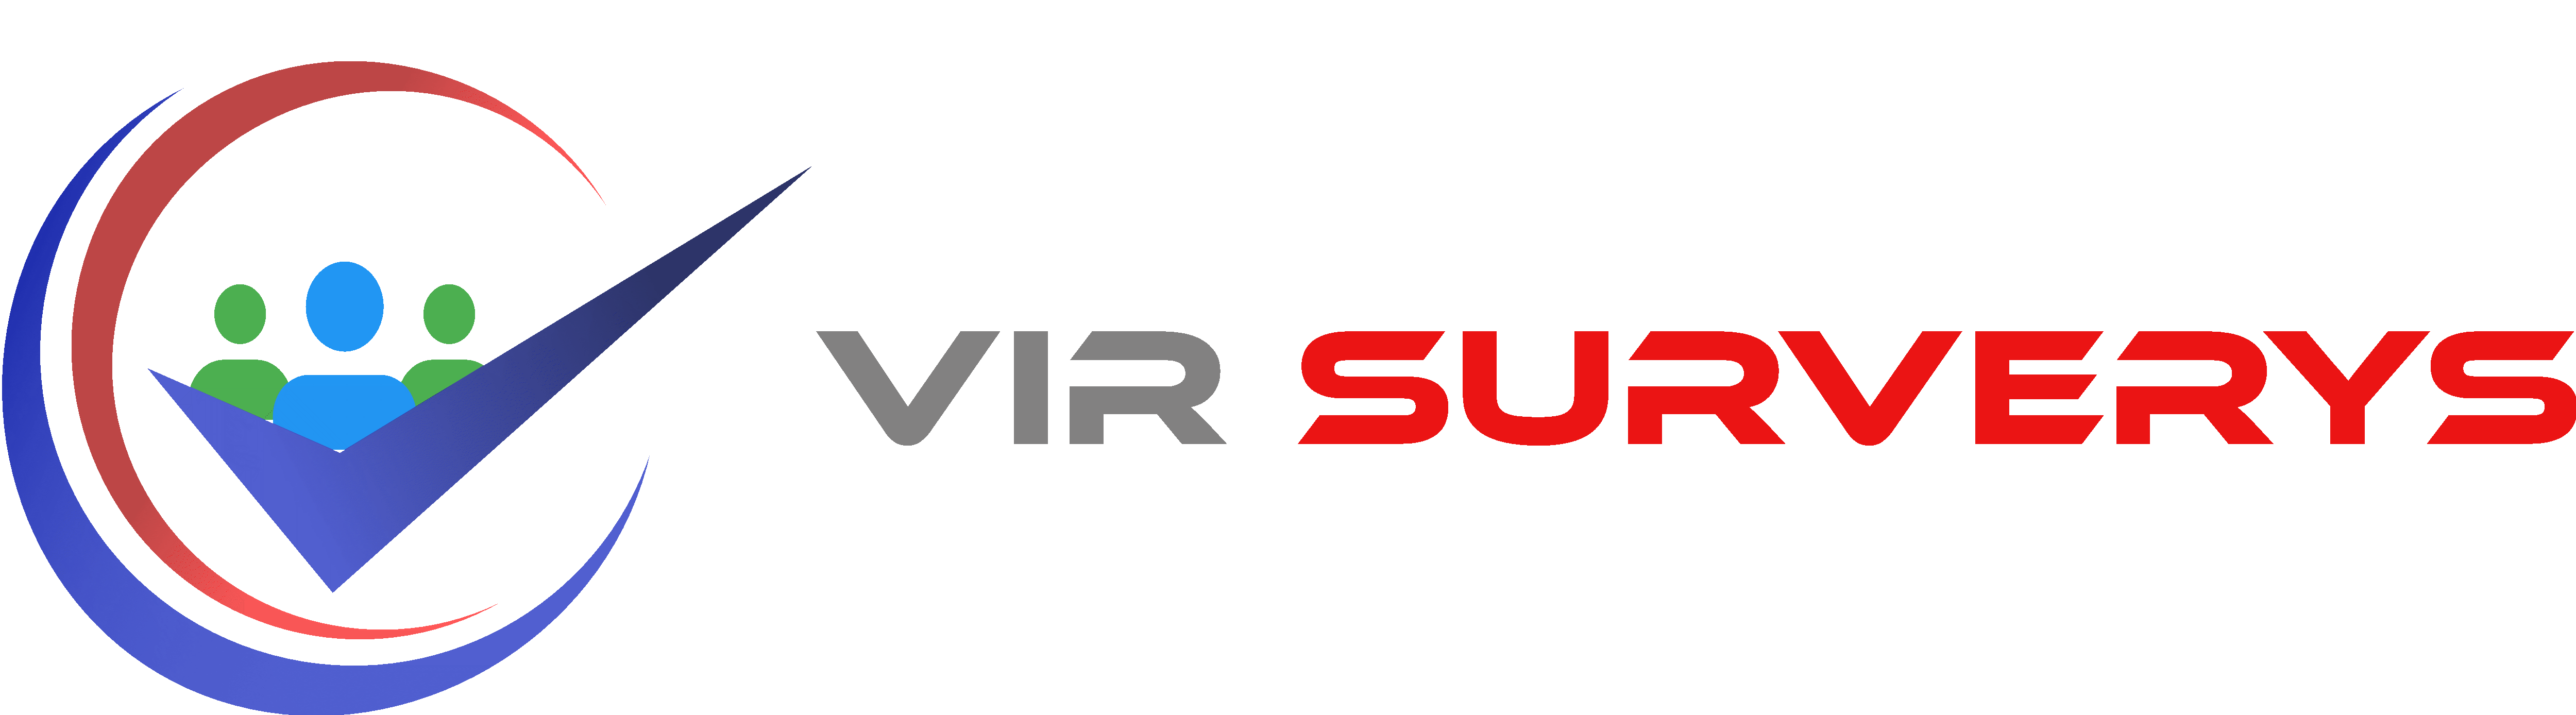 Vir Survey Transparent Logo